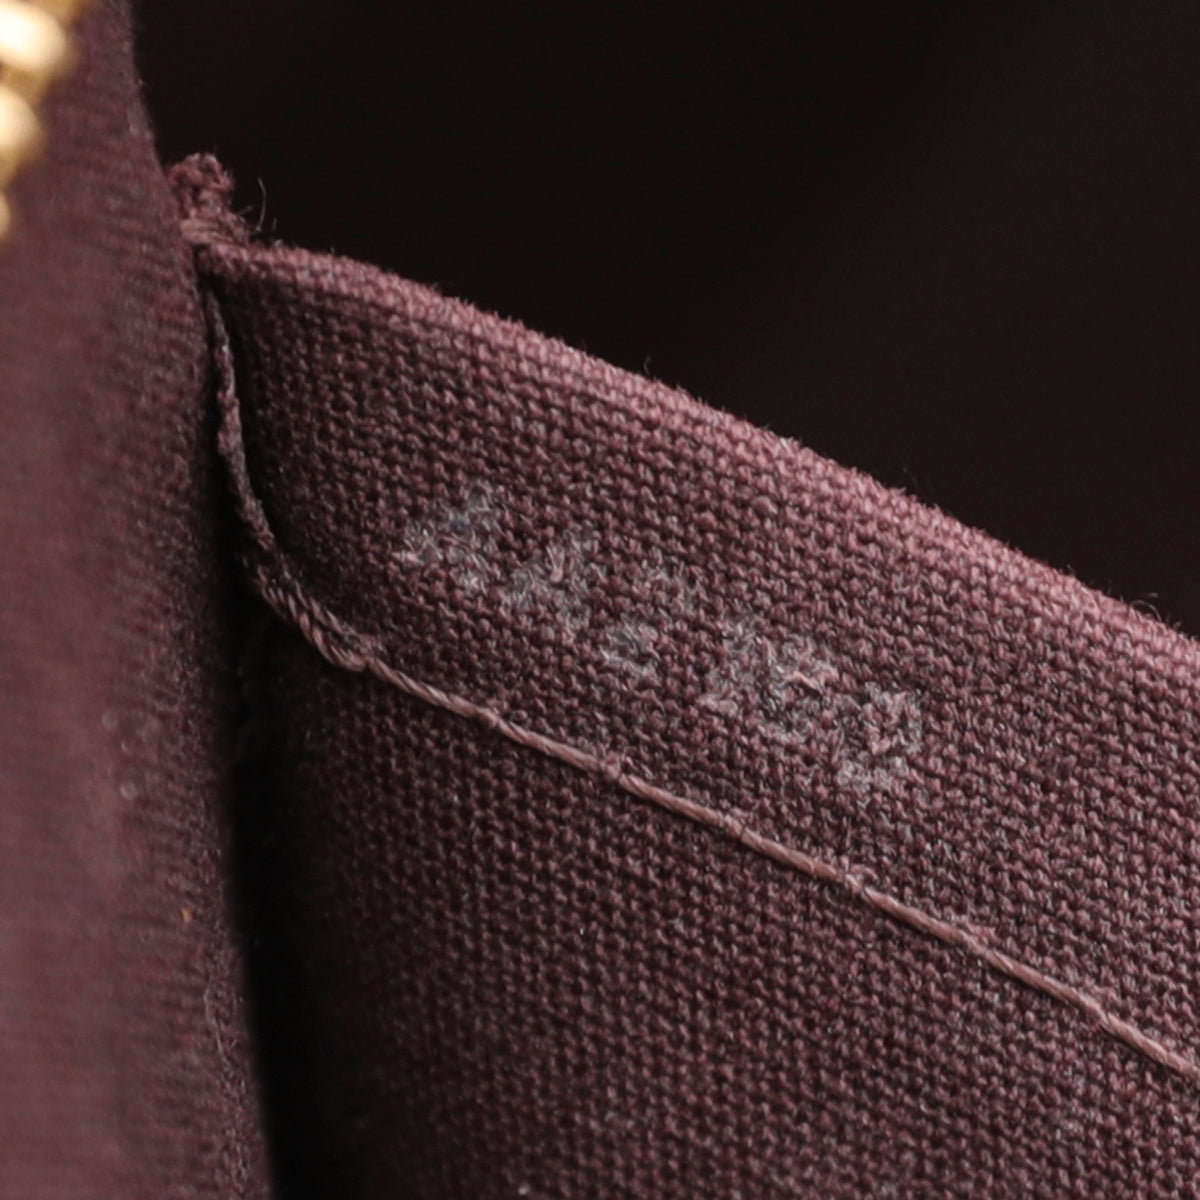 Lot - Louis Vuitton Brea Amarante Monogram Vernis Tote